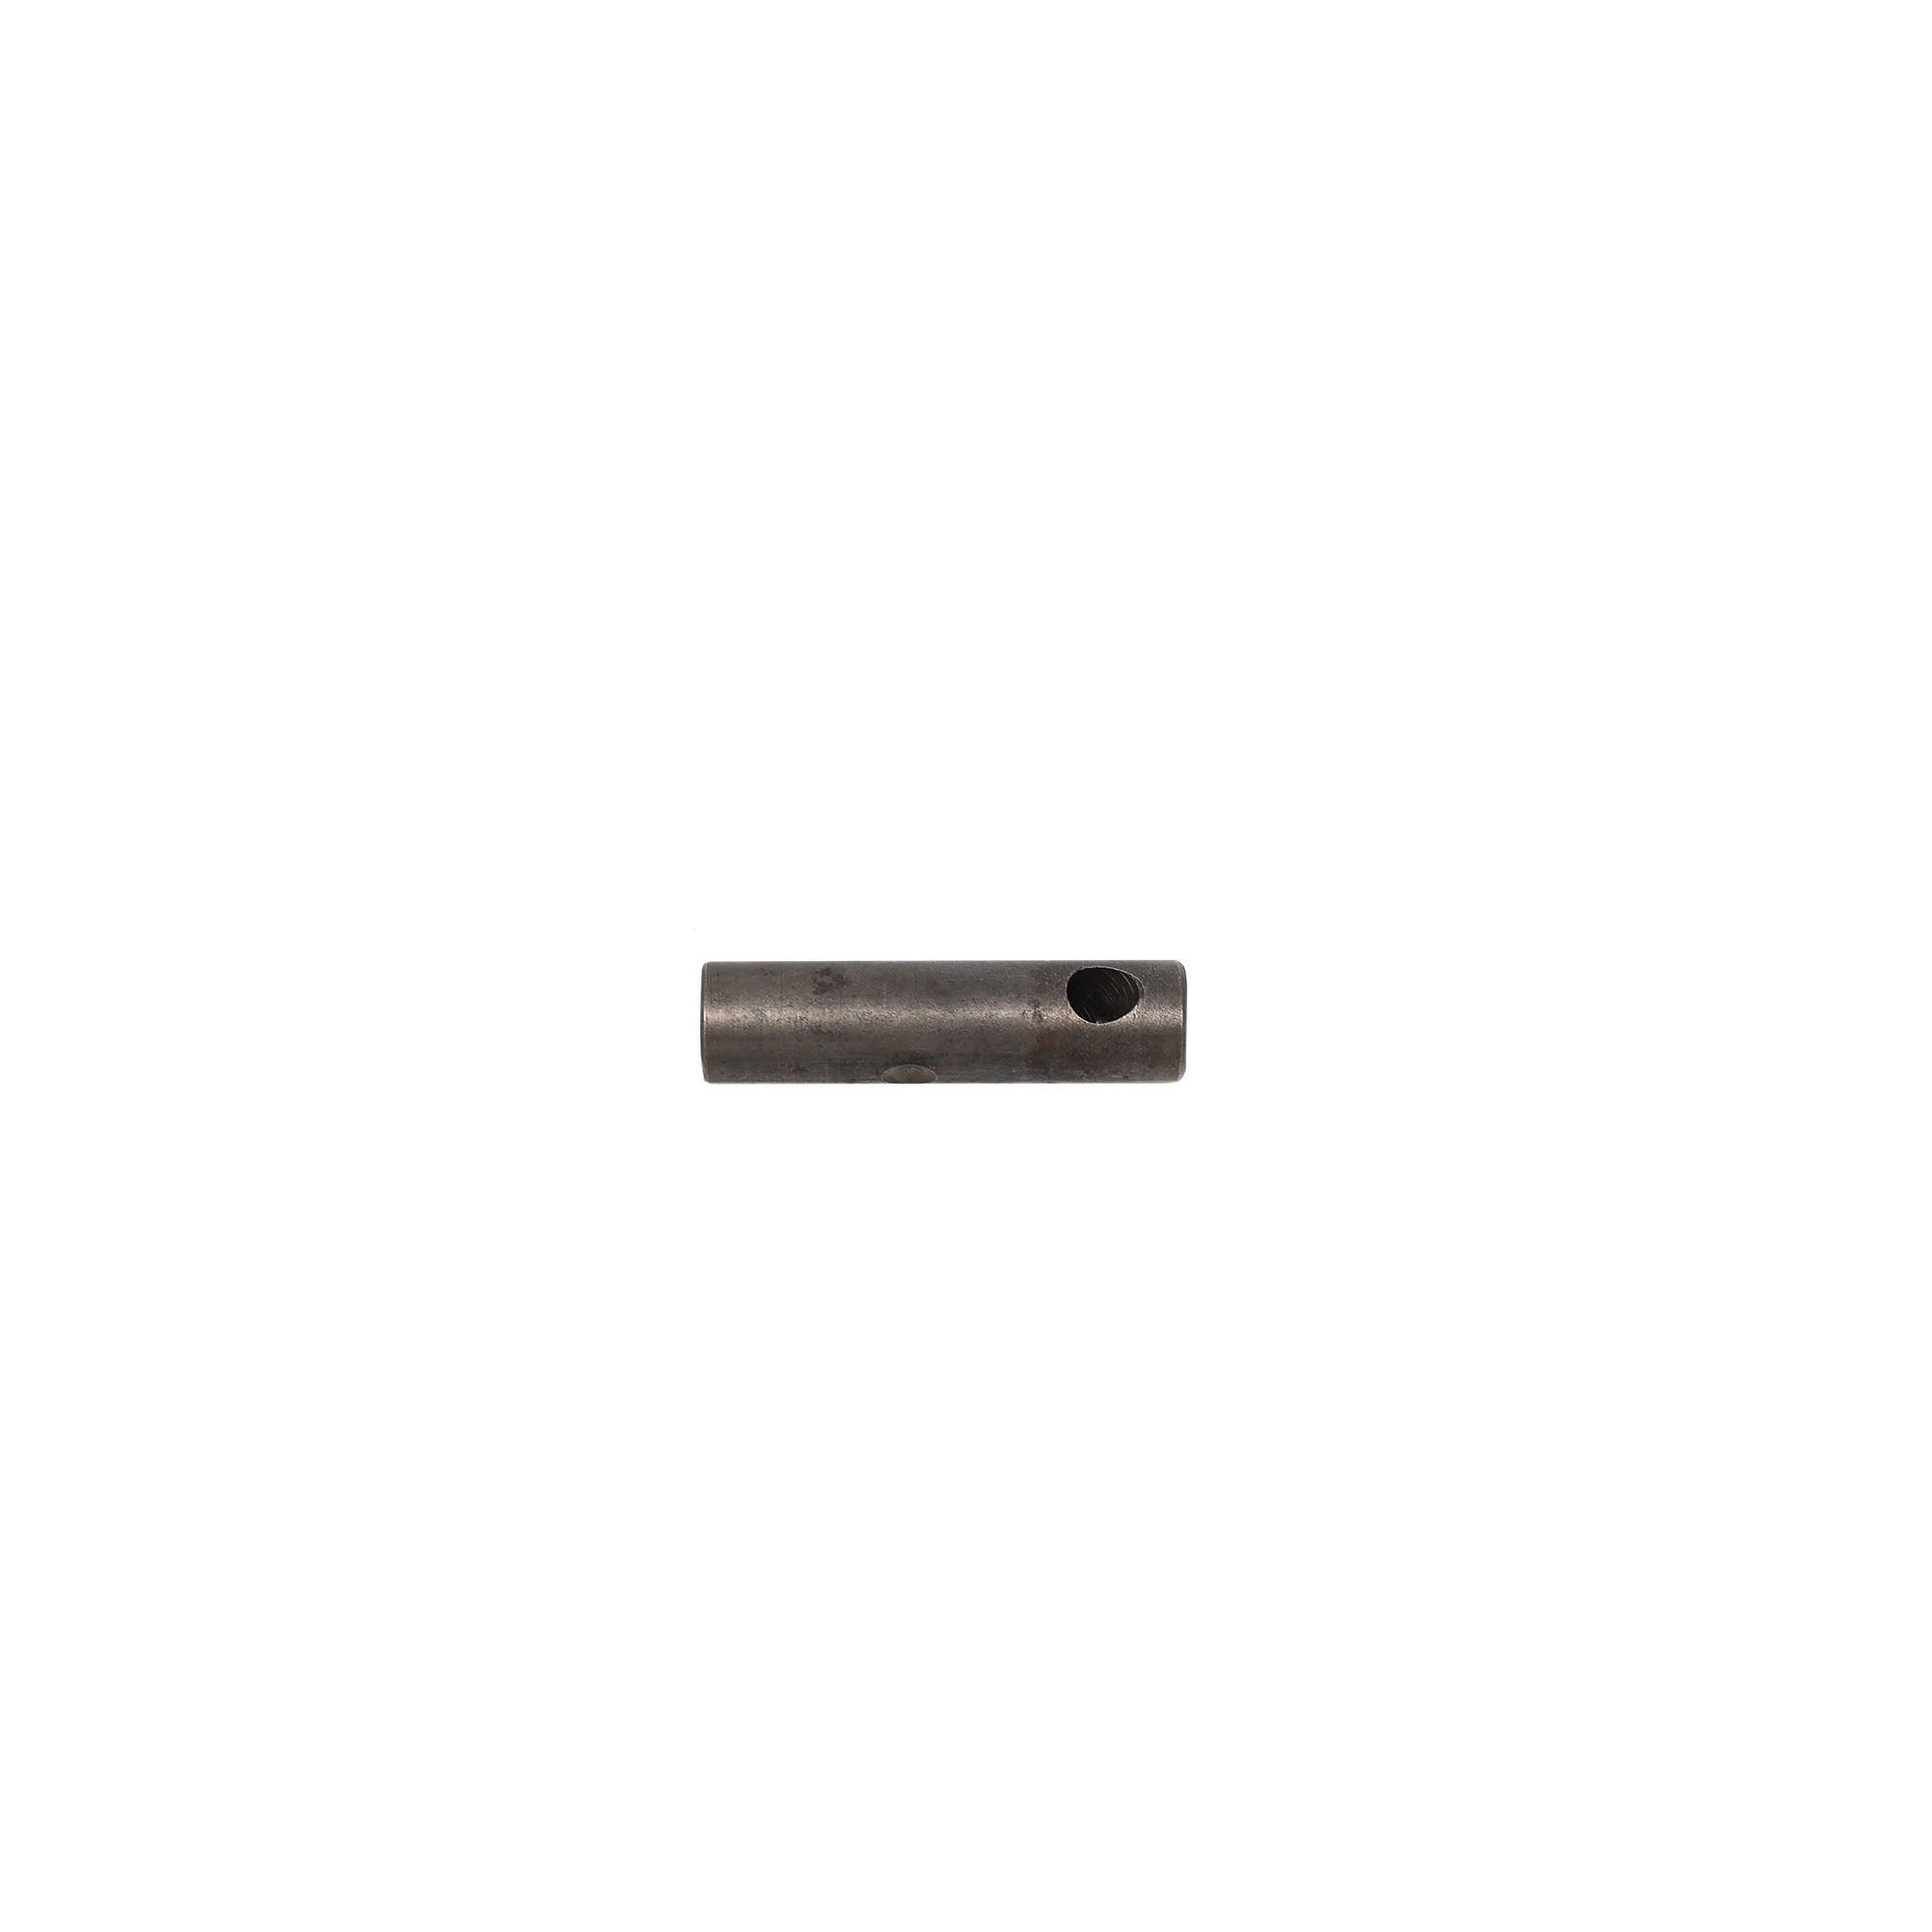 Sandblast Guns & Nozzles, Parts & Accessories, 3/16″ Steel Combo Nozzle for Handheld AHPB1 Gun, 101111 Combo Nozzle, American Hawk Industrial, Dee-Blast